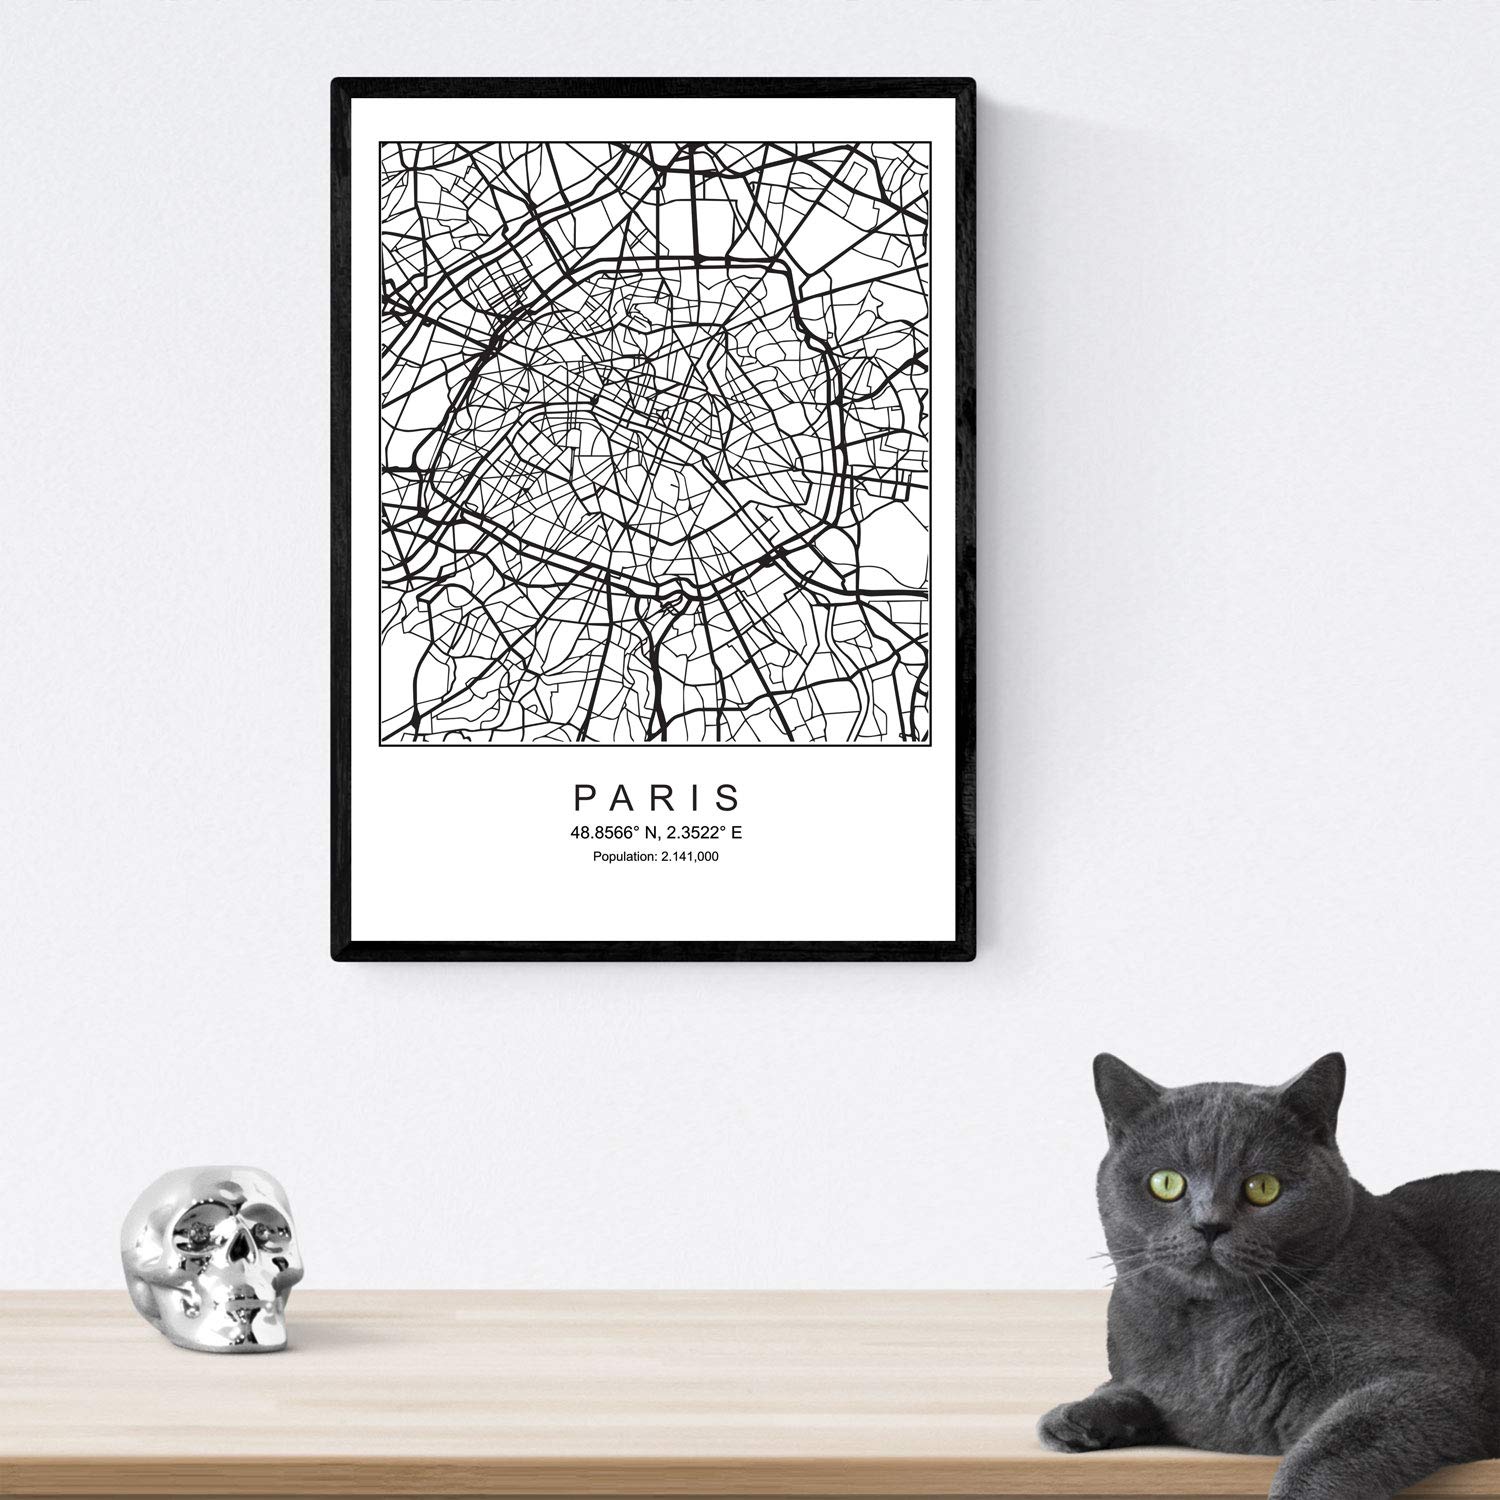 Pack de posters de Paris -Arco del triunfo. Láminas con monumentos de ciudades.-Artwork-Nacnic-Nacnic Estudio SL